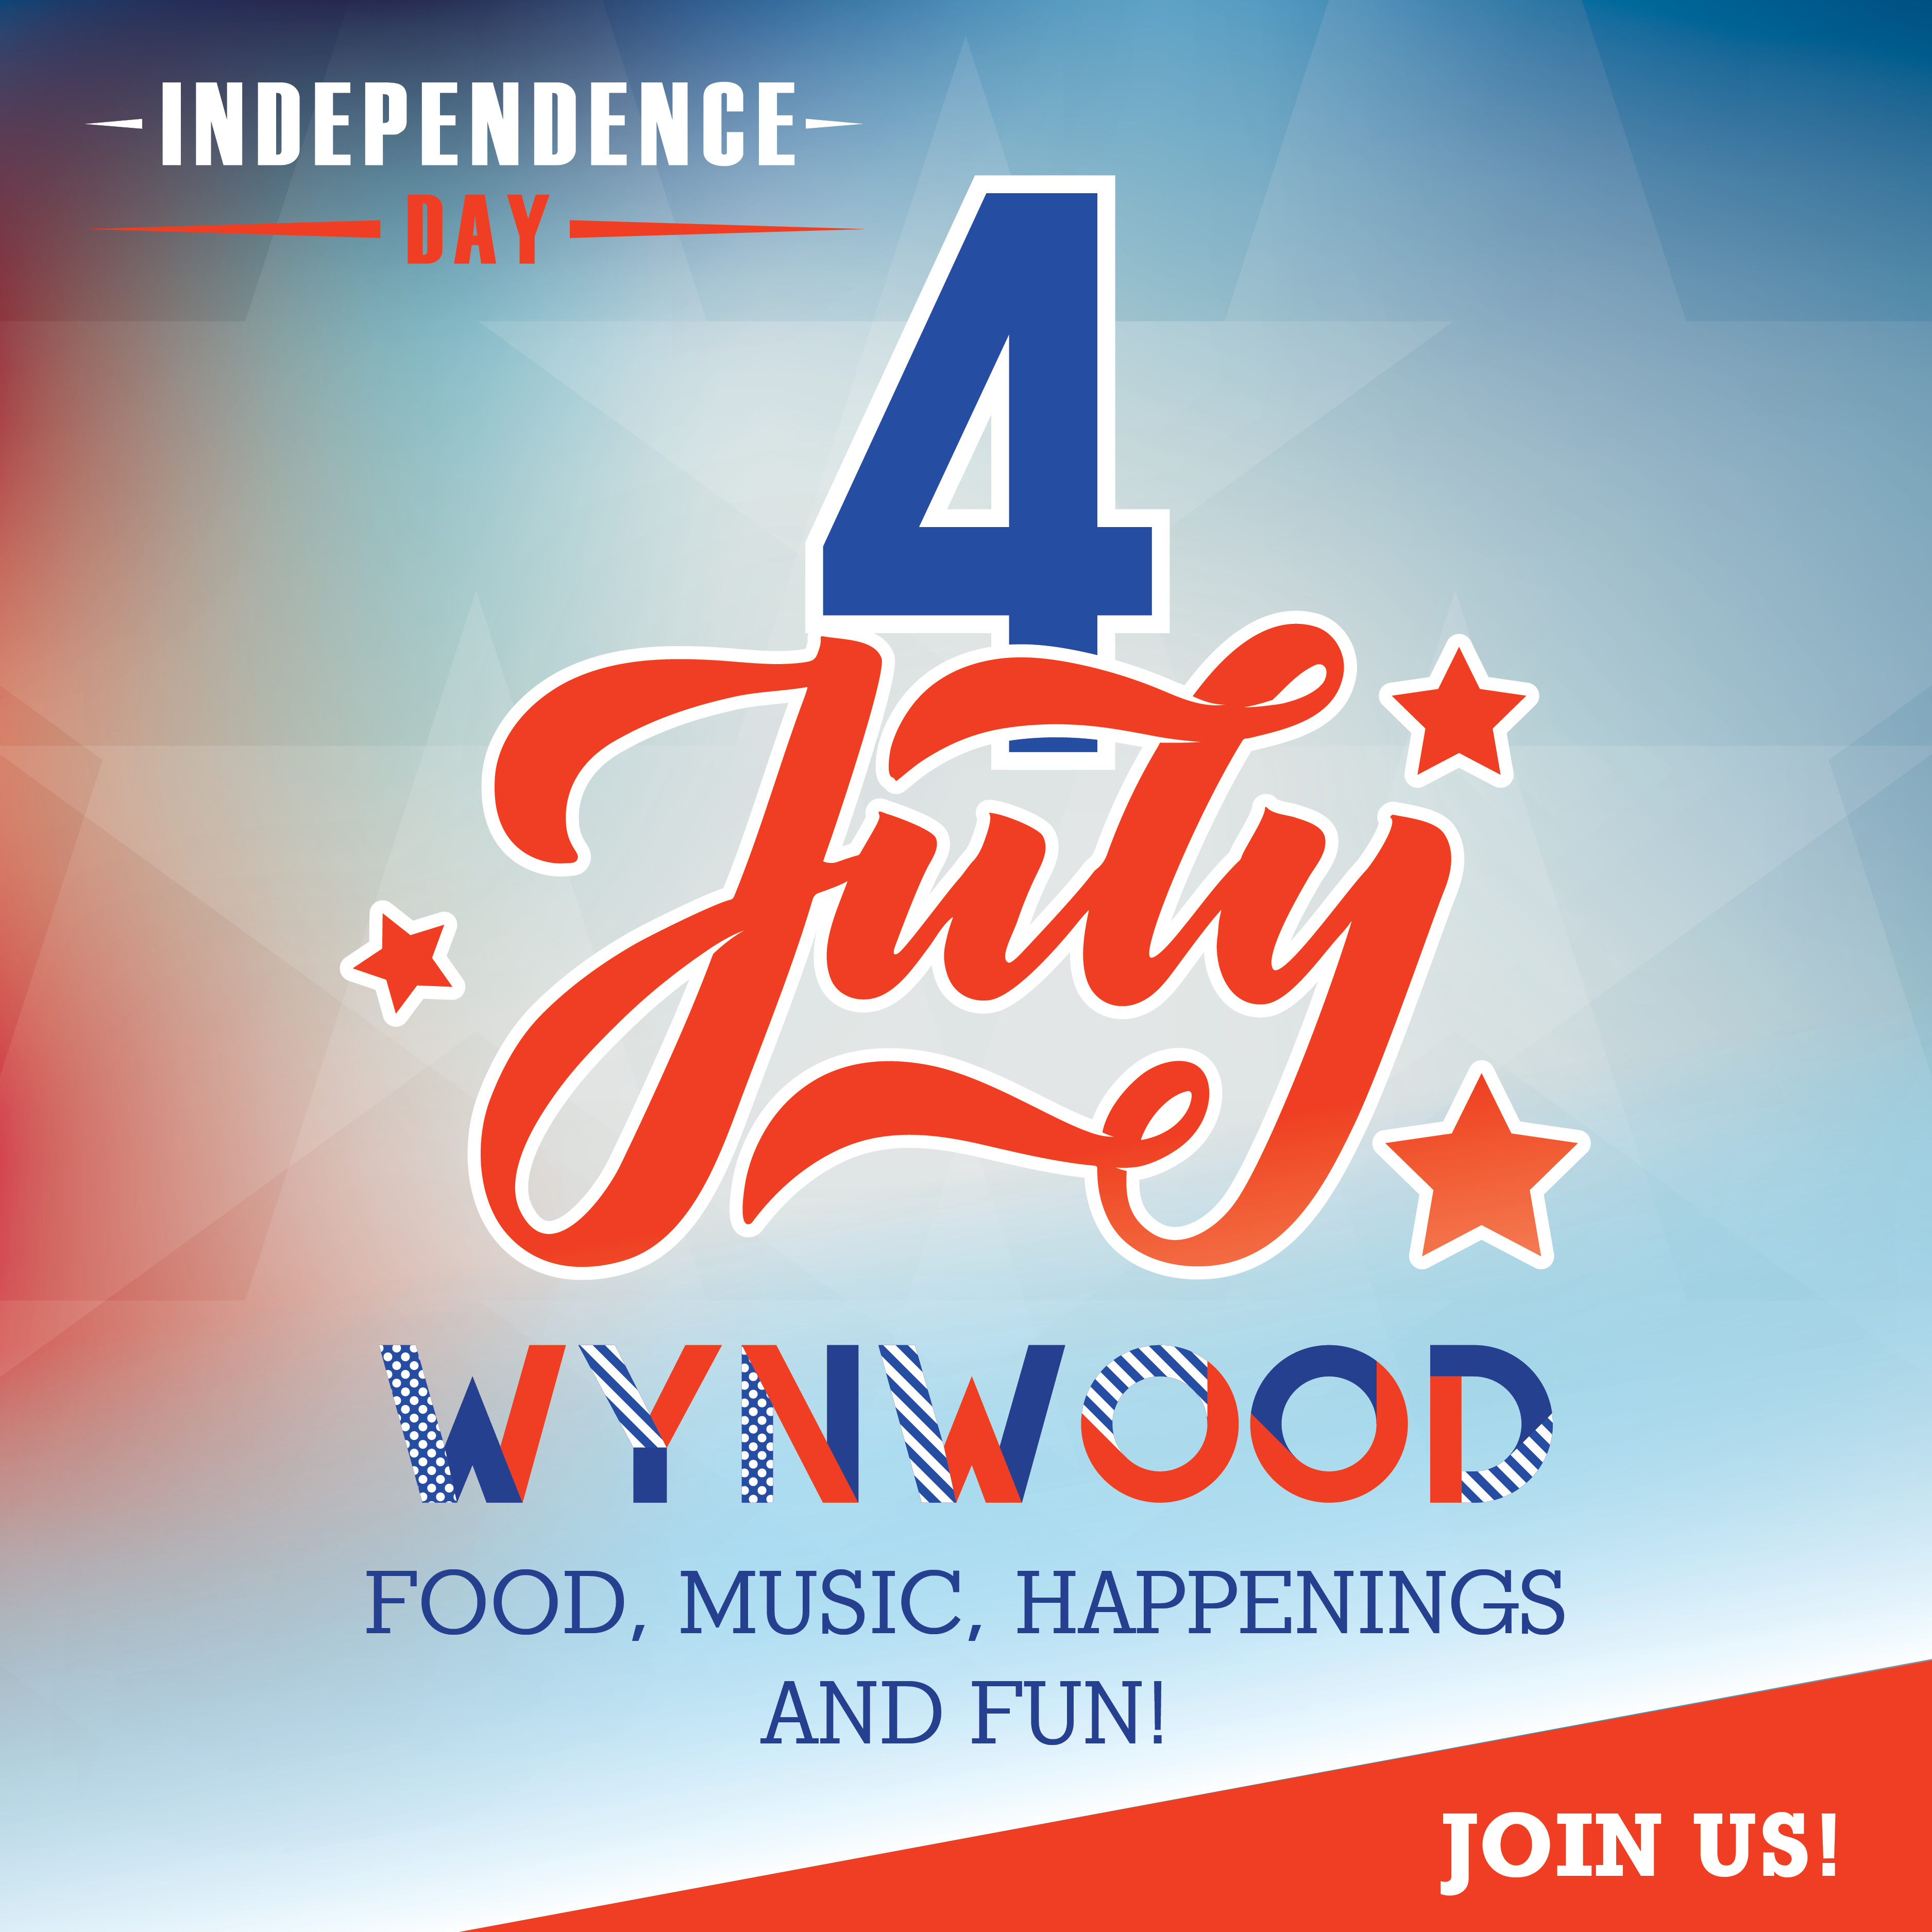 Wynwood: γιορτάζει την Αμερικάνικη ημέρα Ανεξαρτησίας με ένα special event